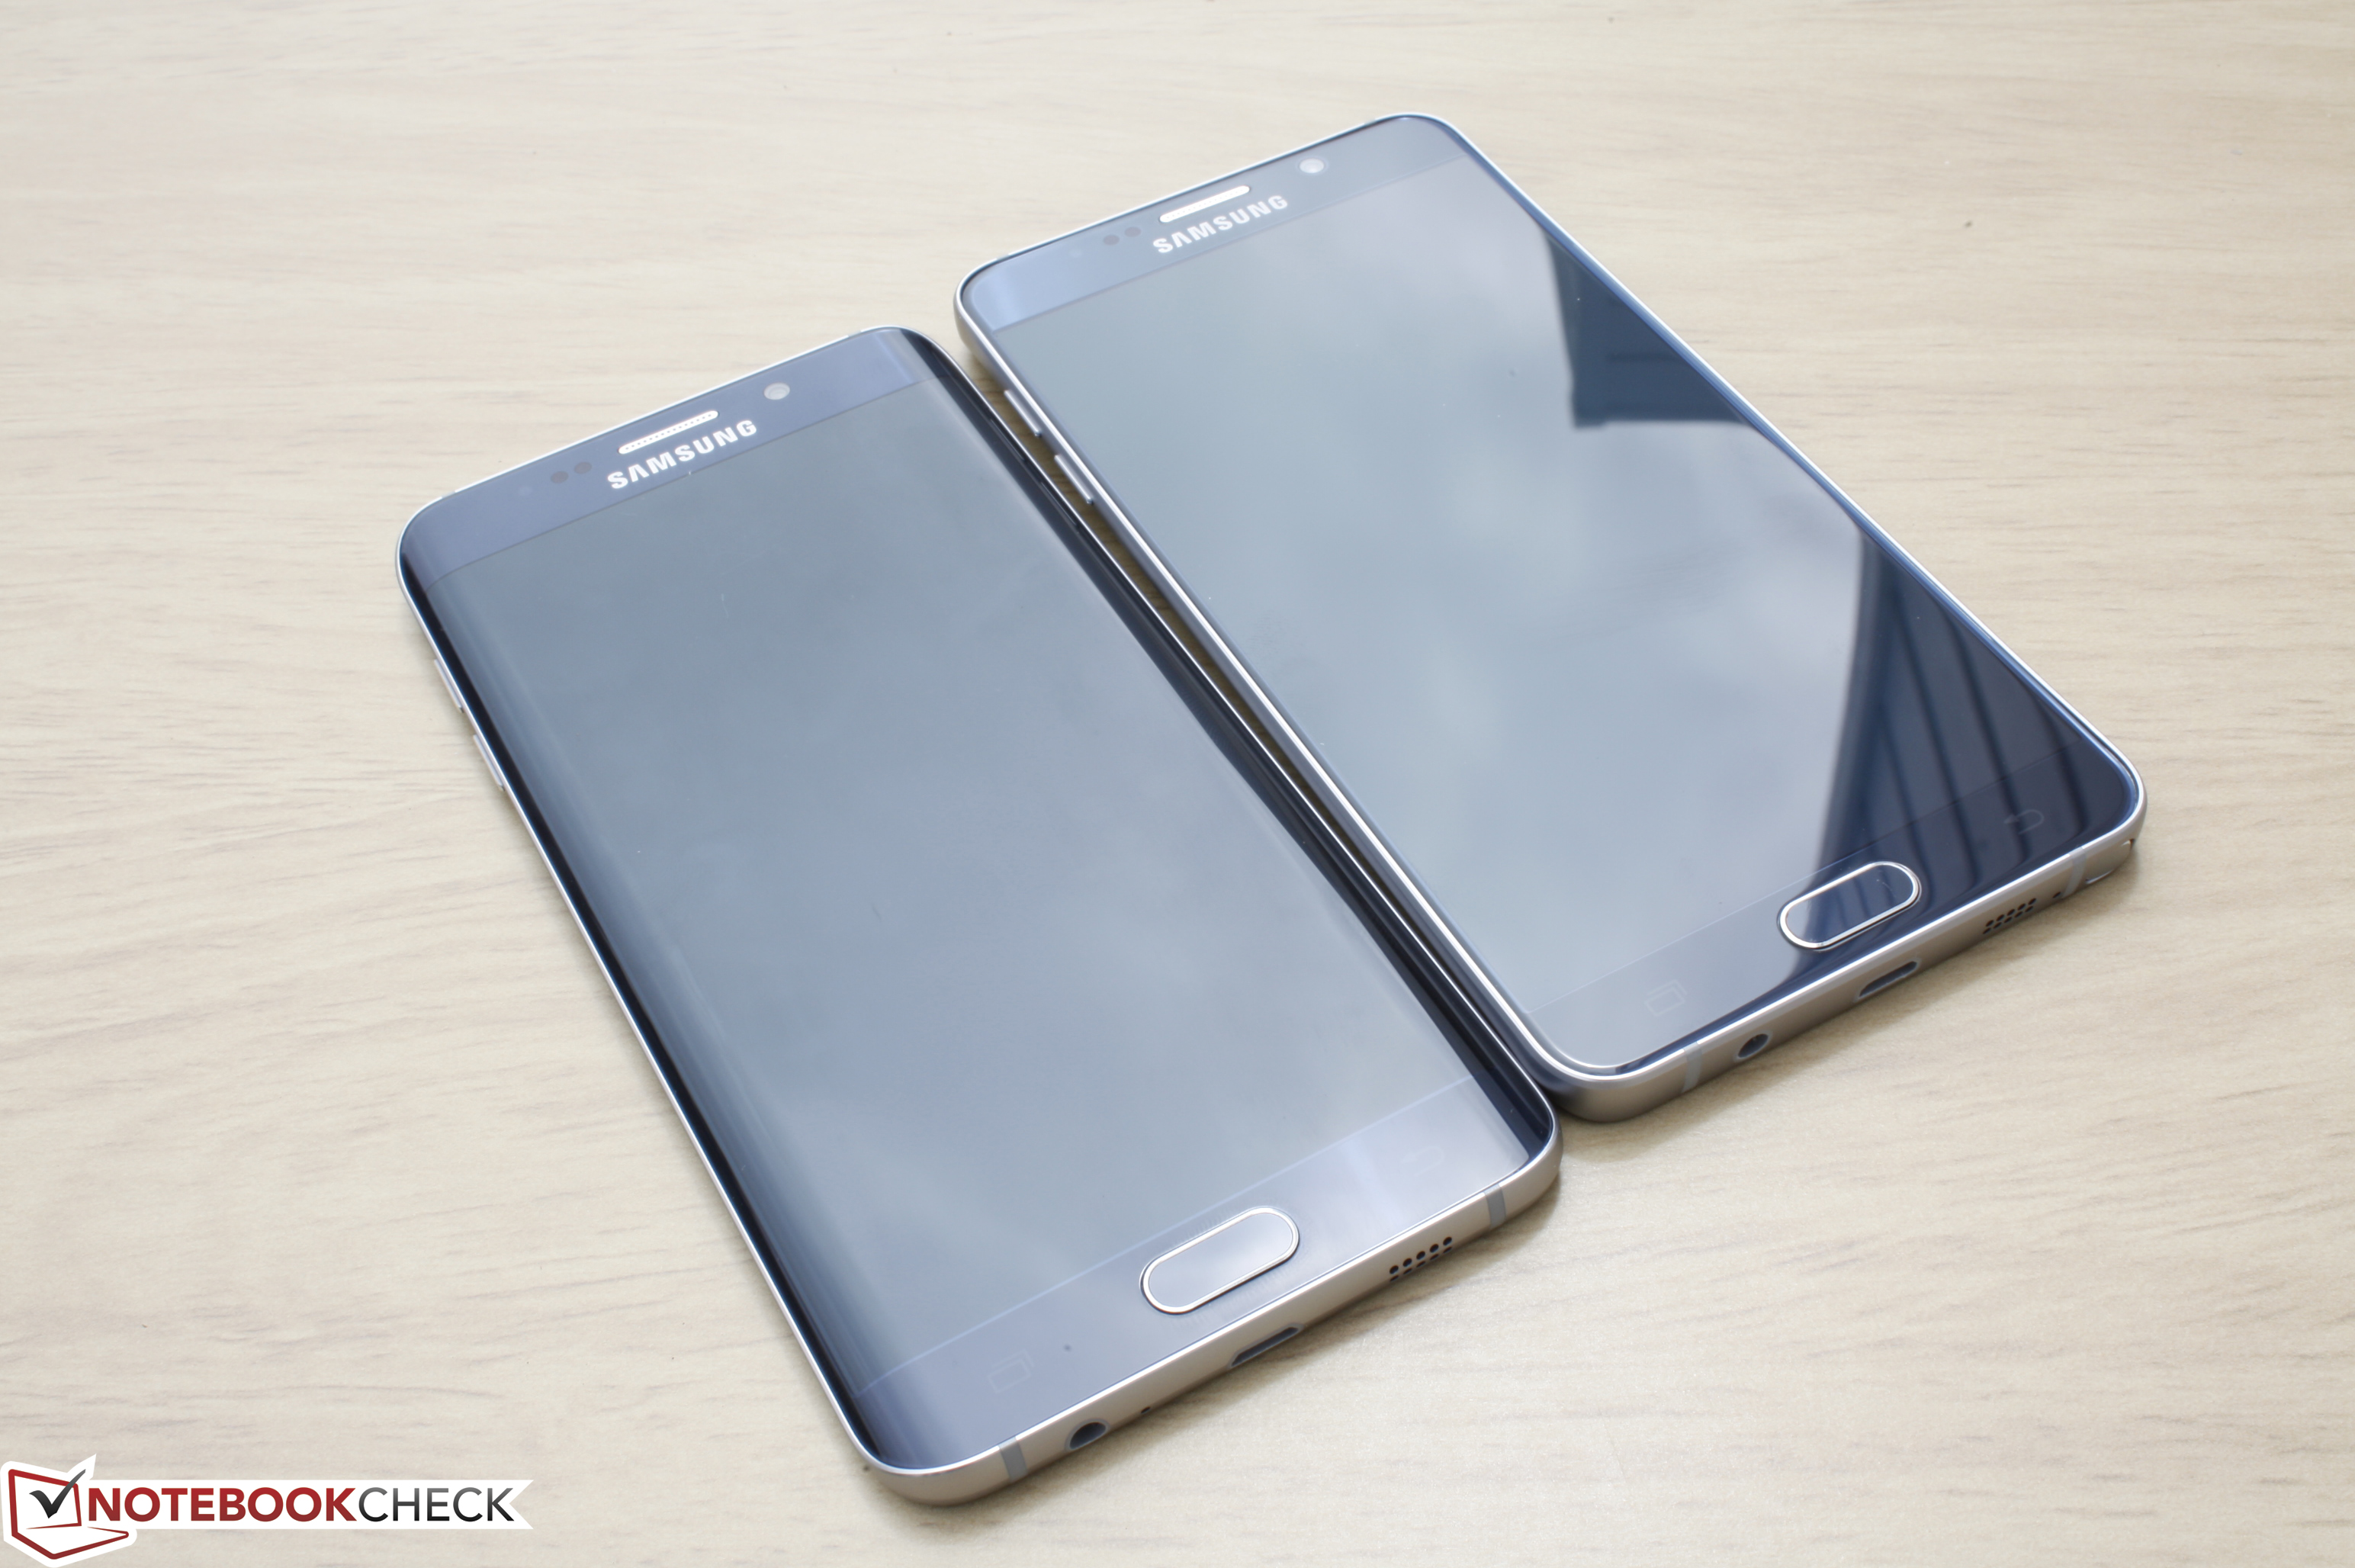 Vervormen Keizer Speciaal Samsung Galaxy S6 Edge+ Smartphone Review - NotebookCheck.net Reviews